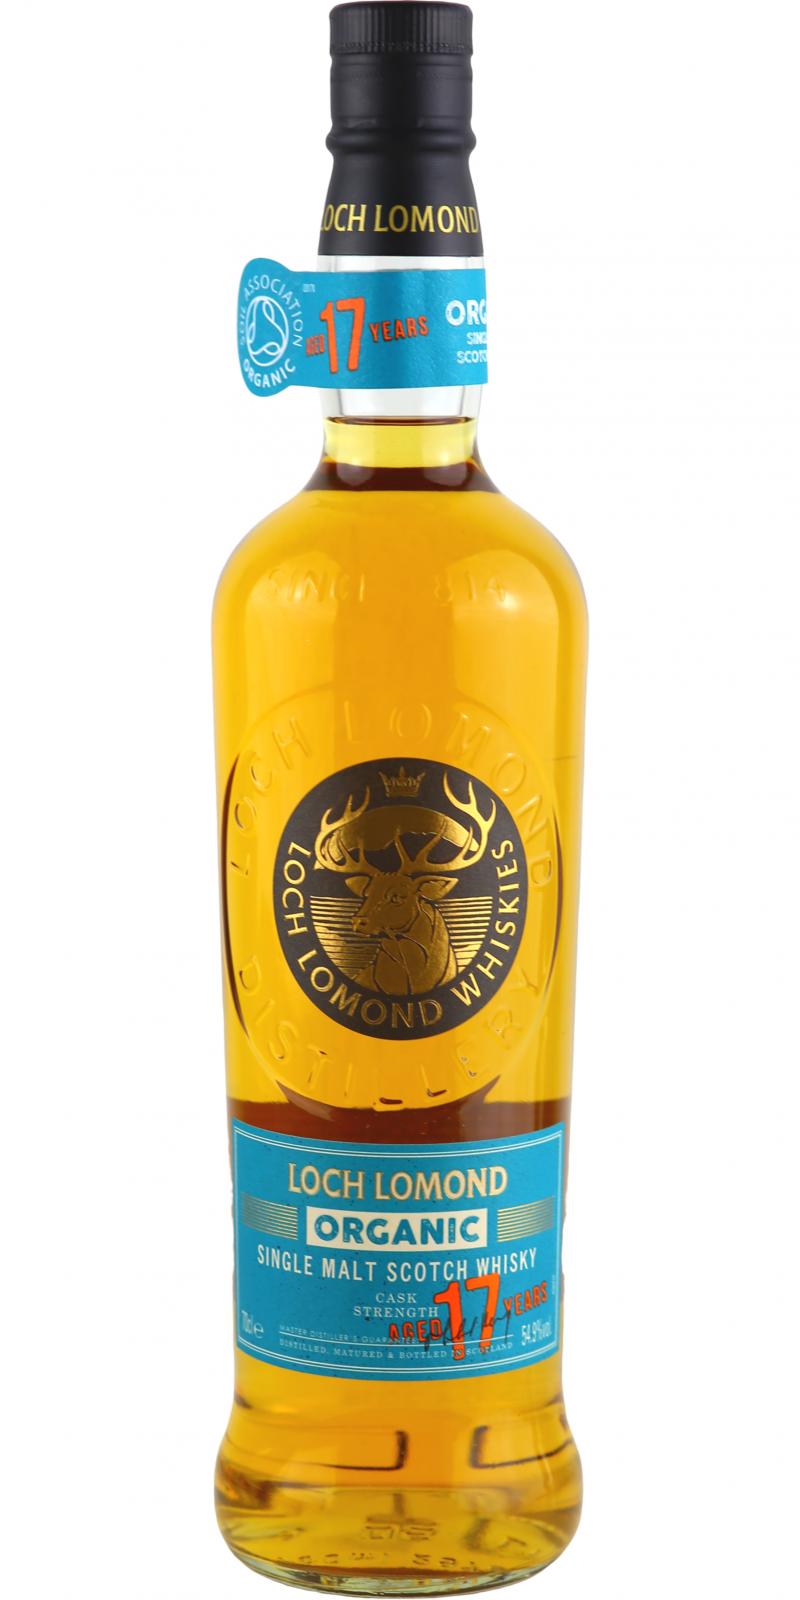 Loch Lomond 17-year-old